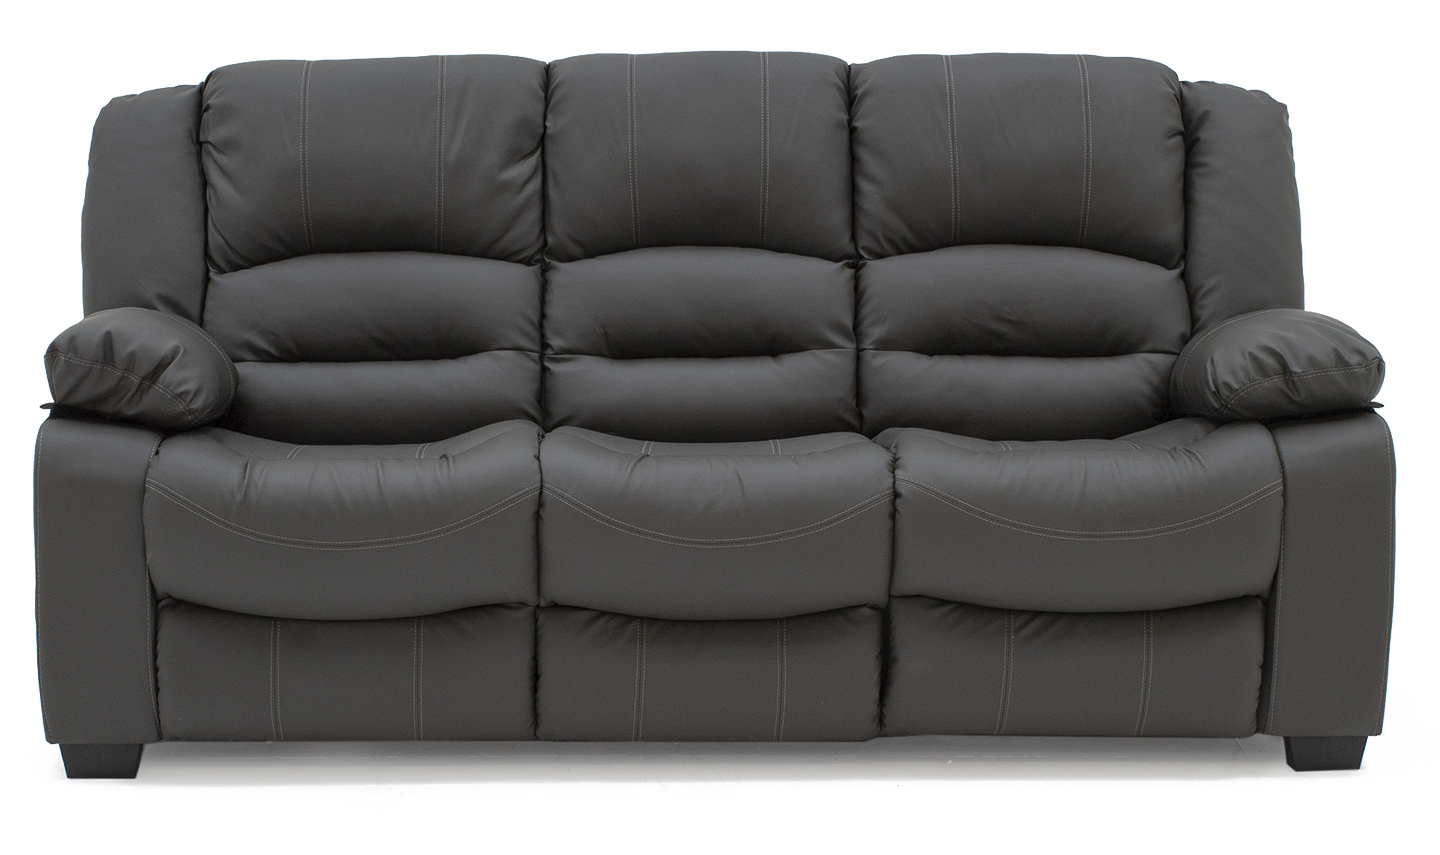 Barletto Grey 3 Seater Leather Sofa